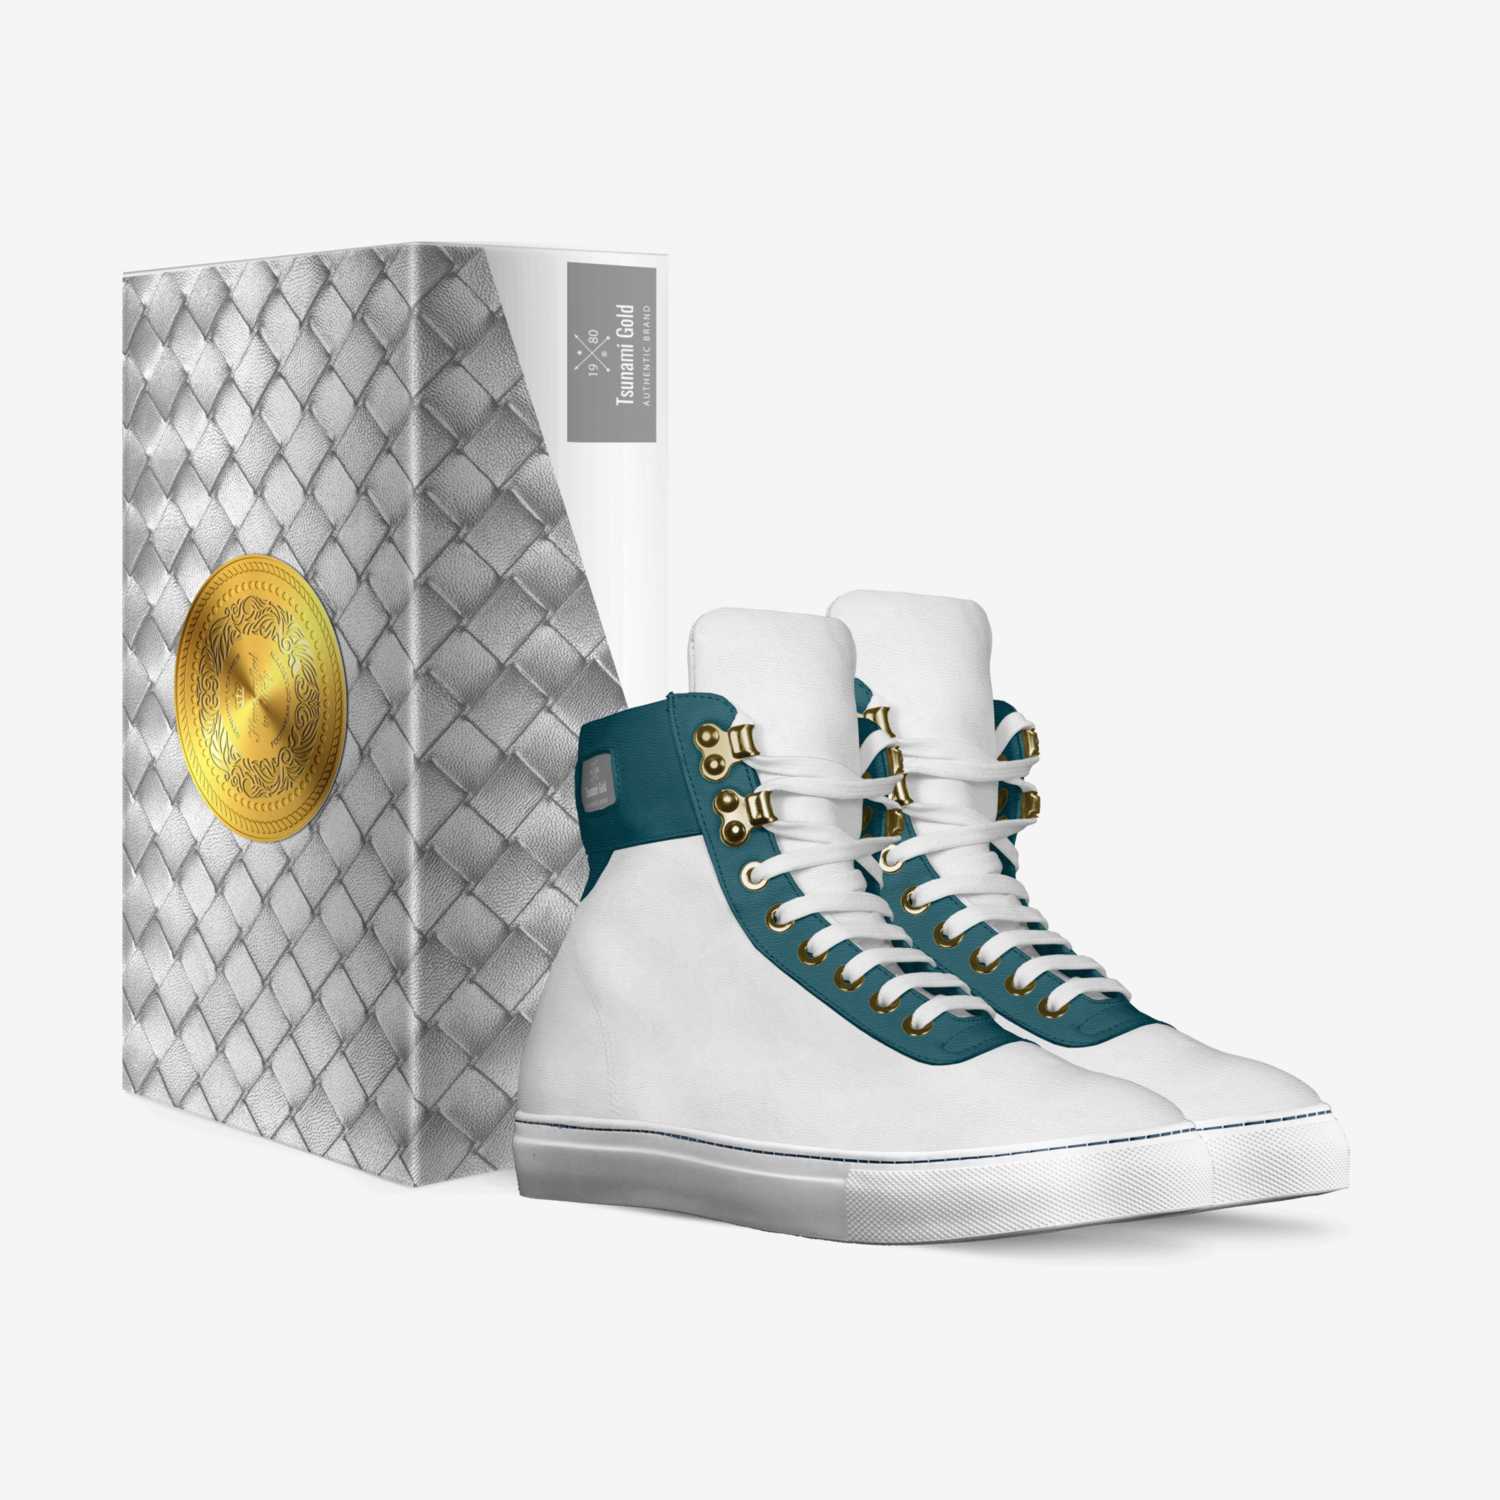 Tsunami Gold custom made in Italy shoes by Antoniokey12 | Box view